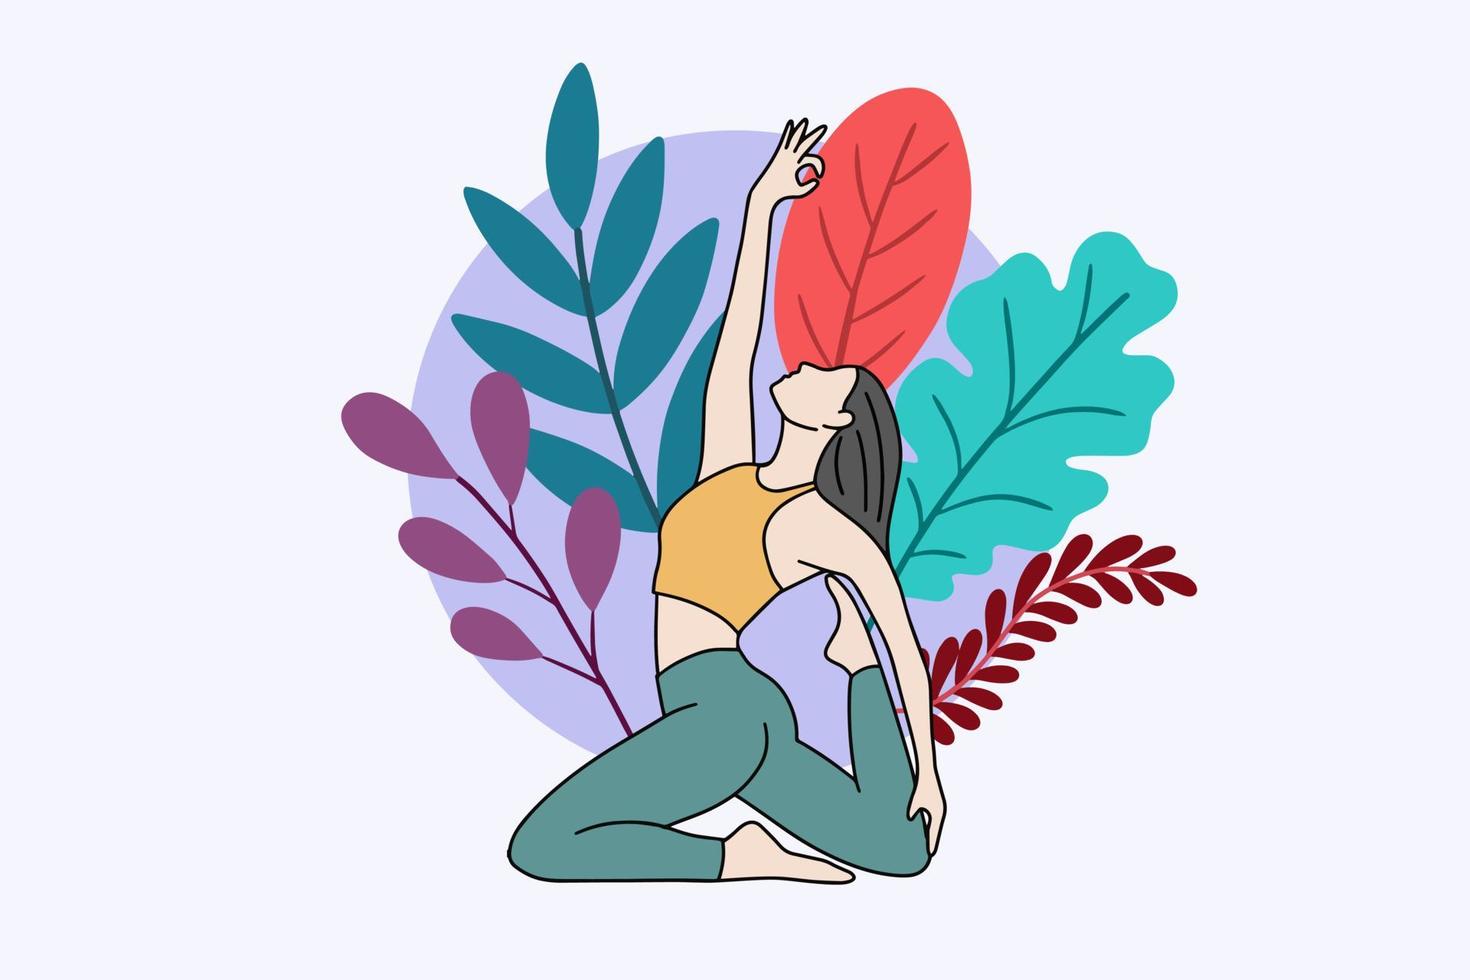 mujer niña yoga meditación gente pose espiritual relajarse ilustración plana vector